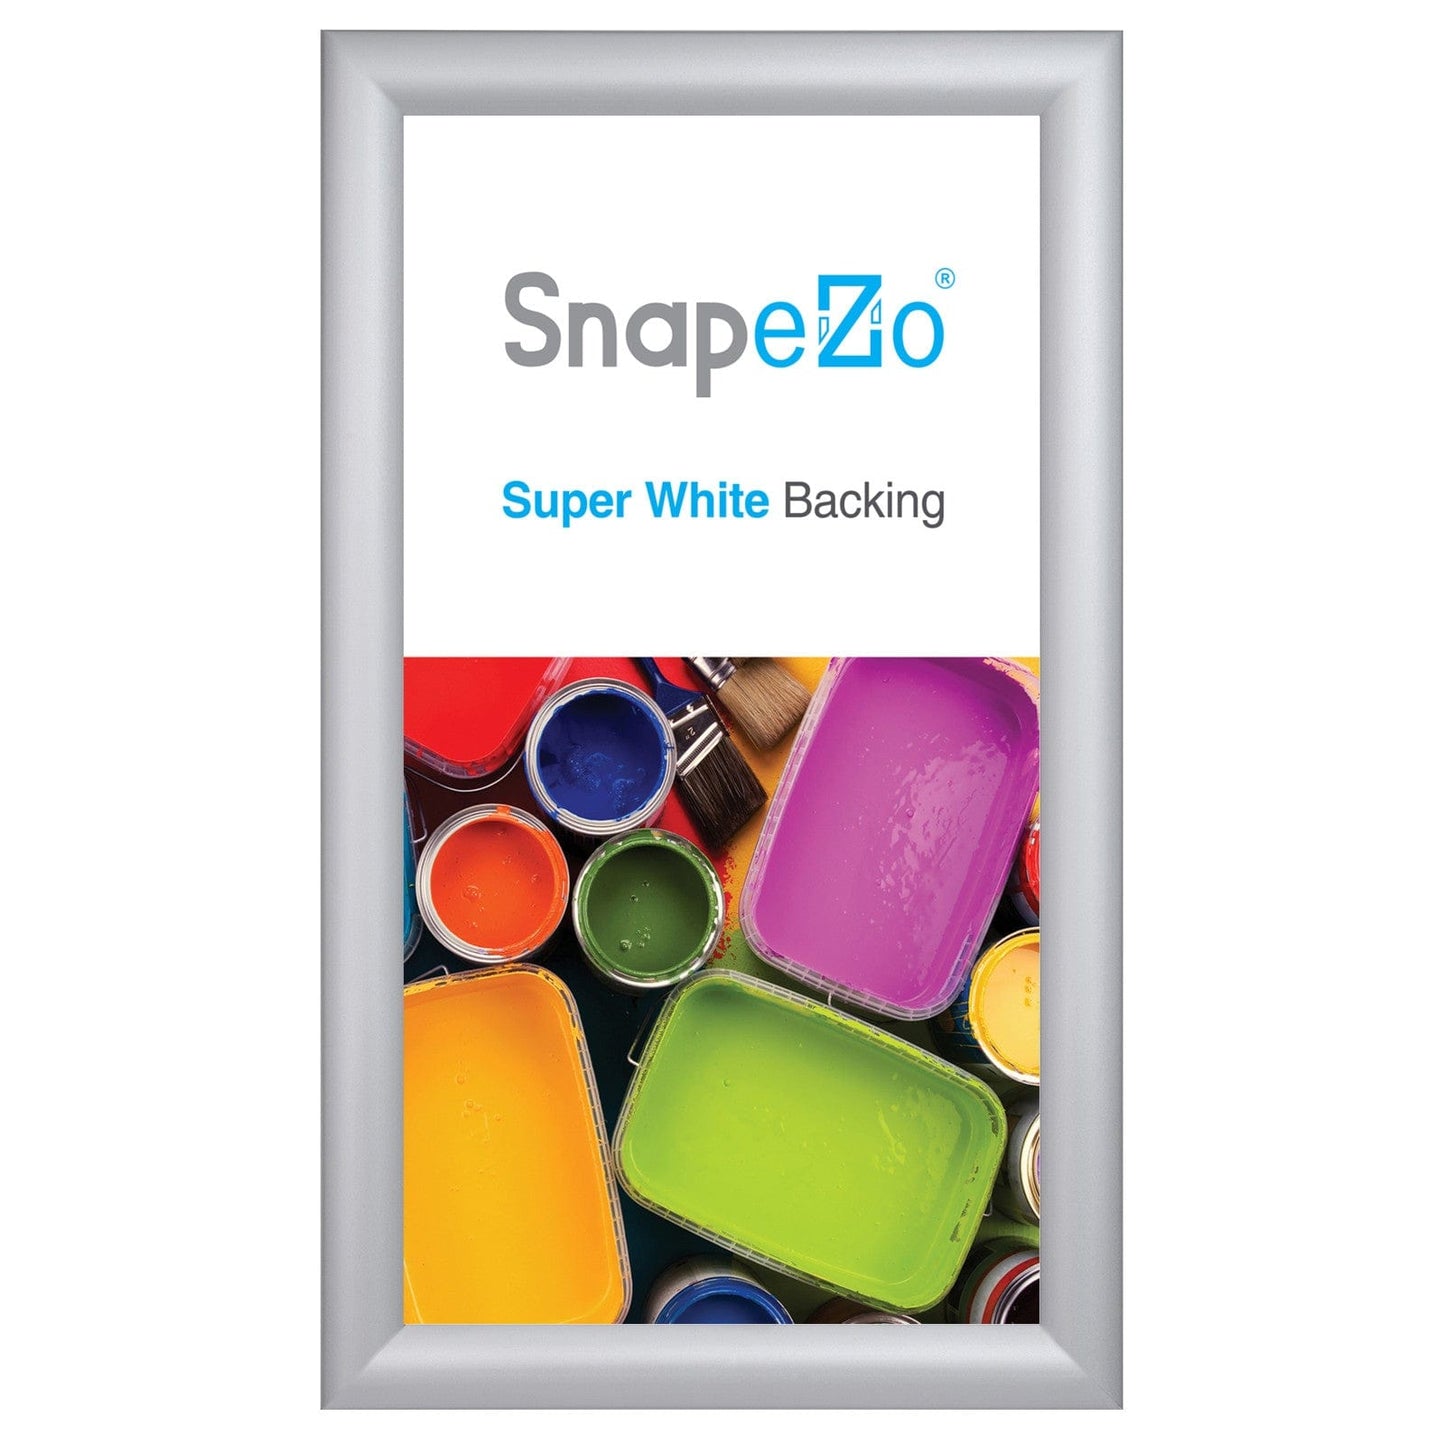 10x18 Silver SnapeZo® Snap Frame - 1.2" Profile - Snap Frames Direct